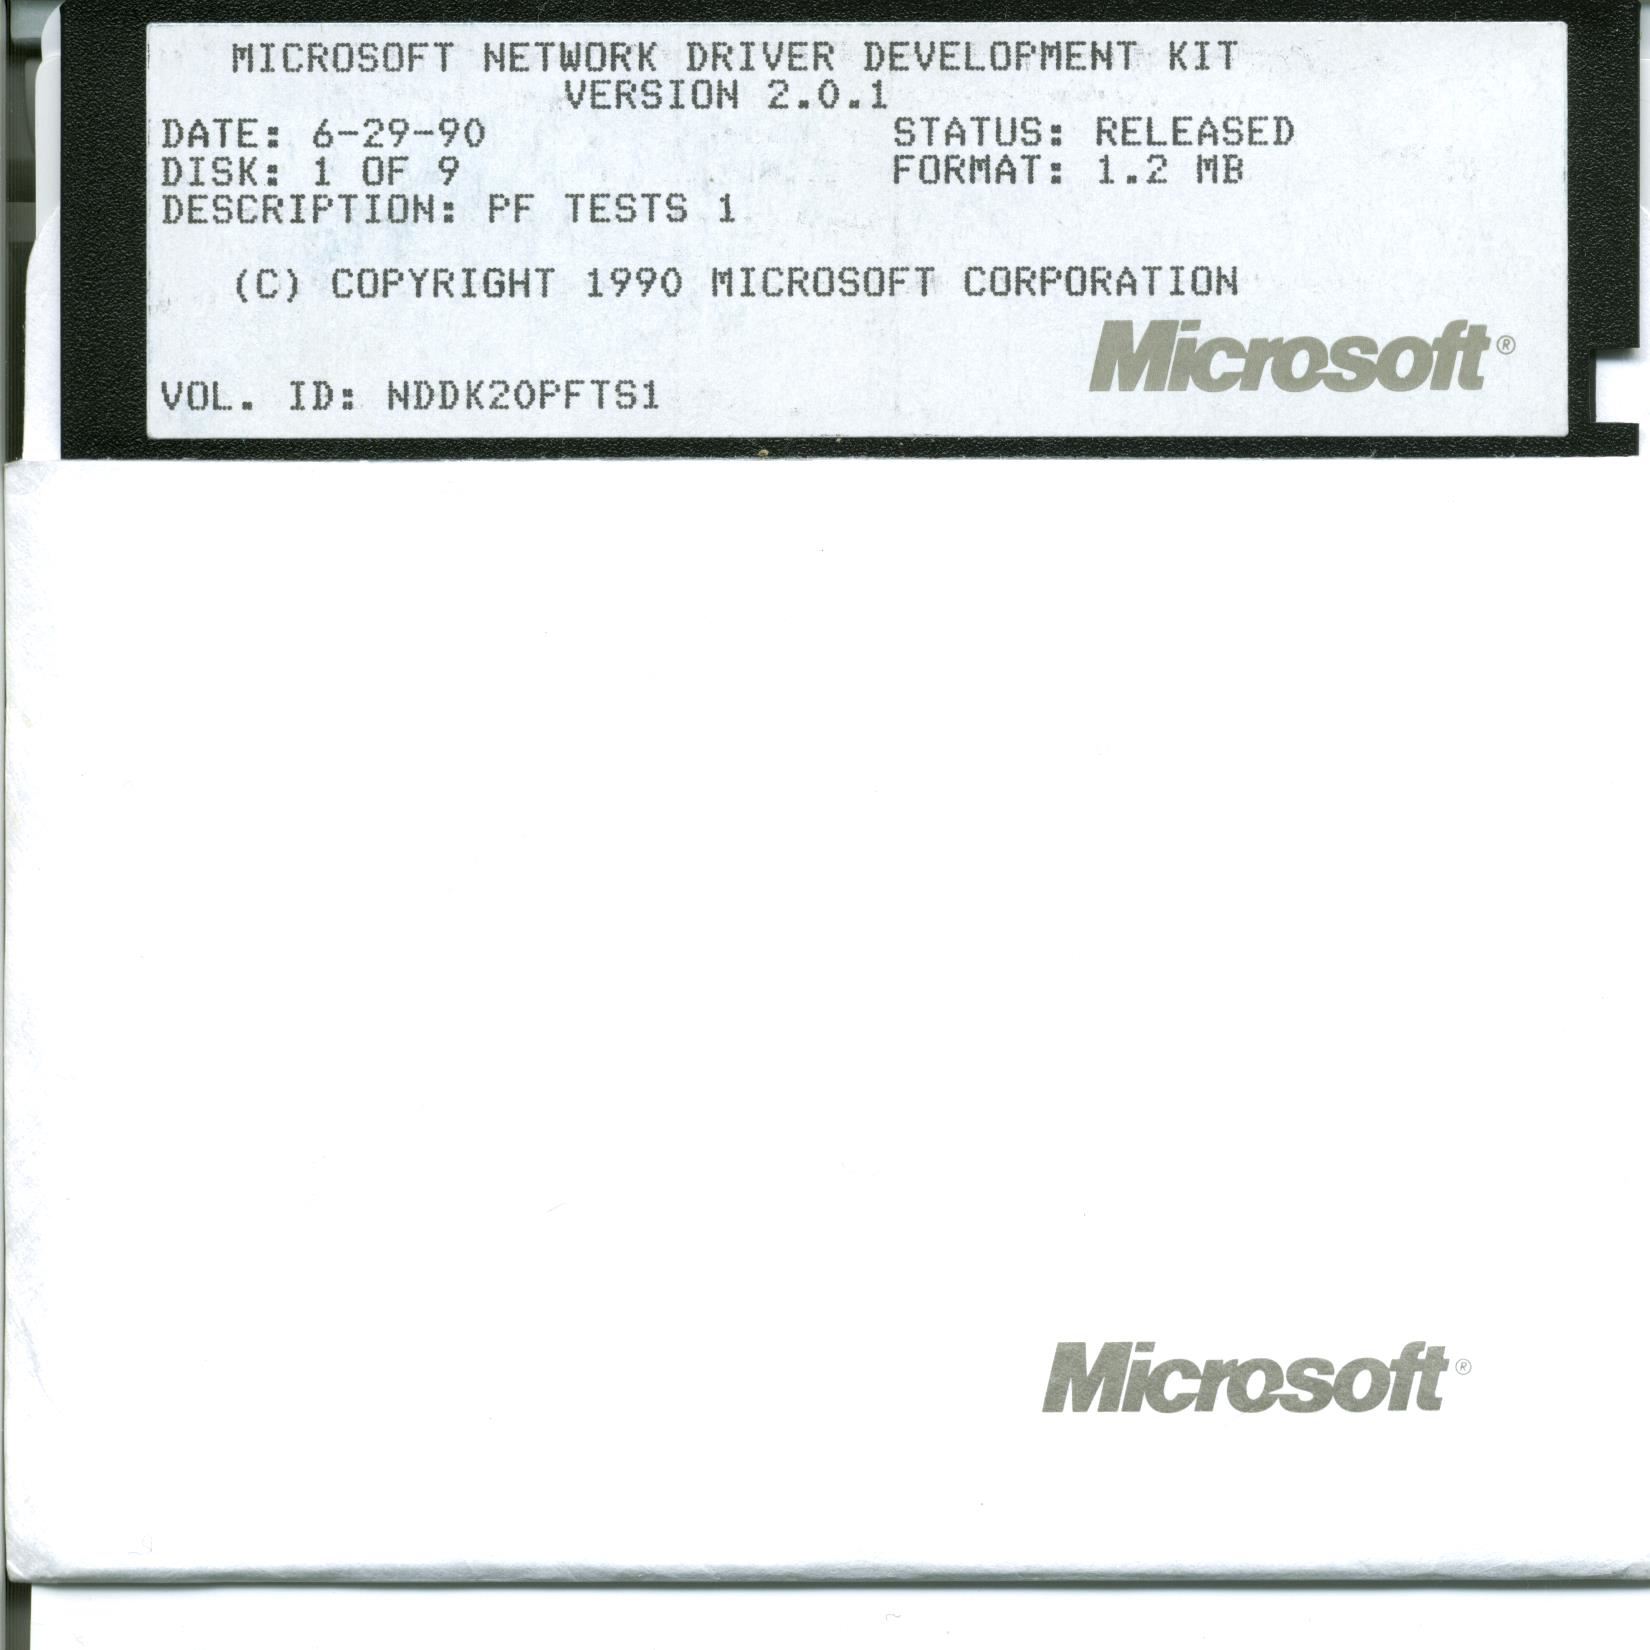 Microsoft Network Driver Development Kit - Disk